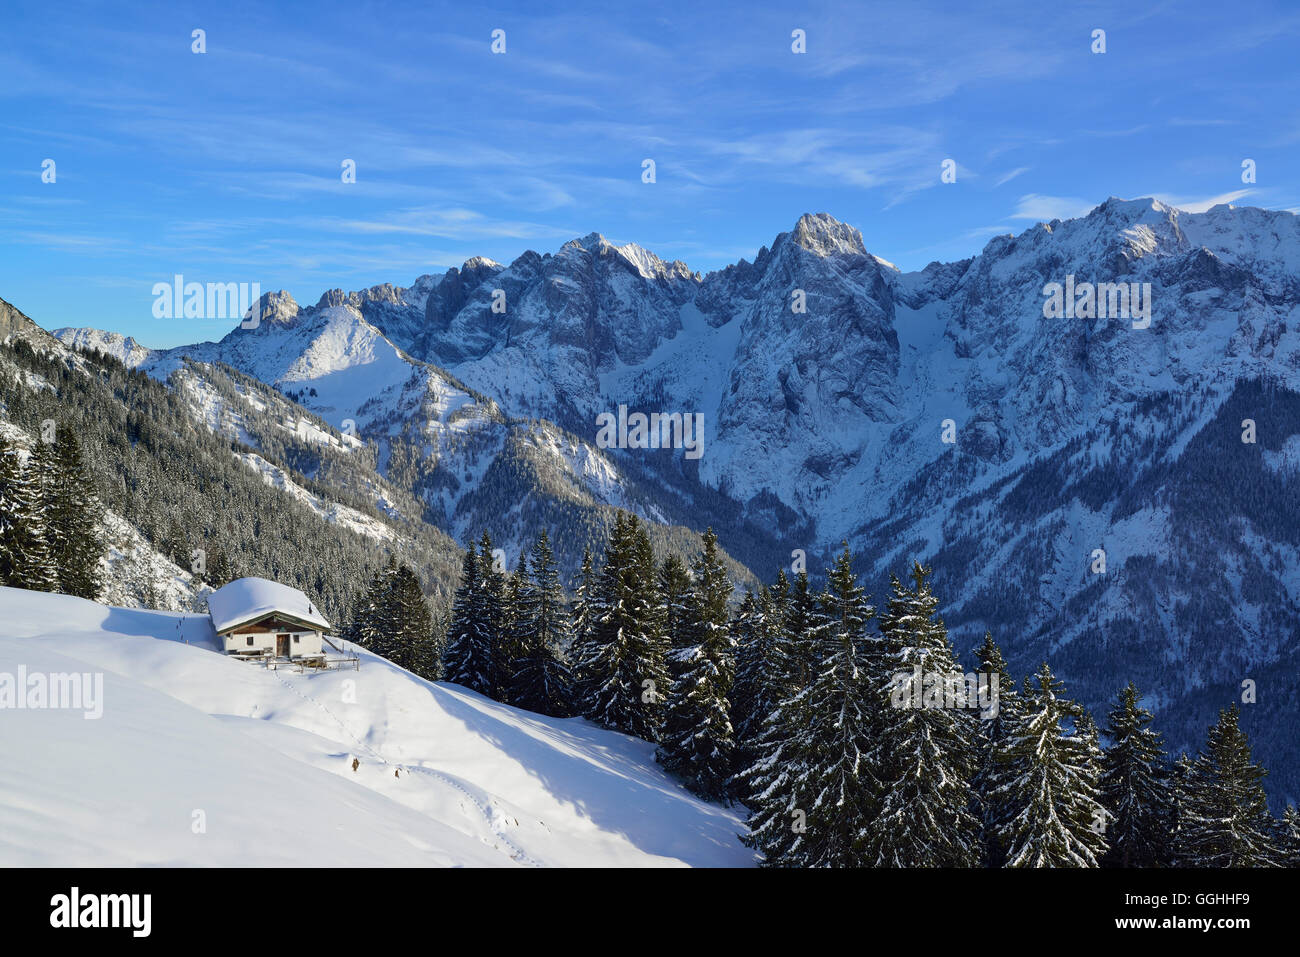 Snow-covered alpine hut in front of mountain scenery, Wilder Kaiser, Kaiser Mountains, Tyrol, Austria Stock Photo